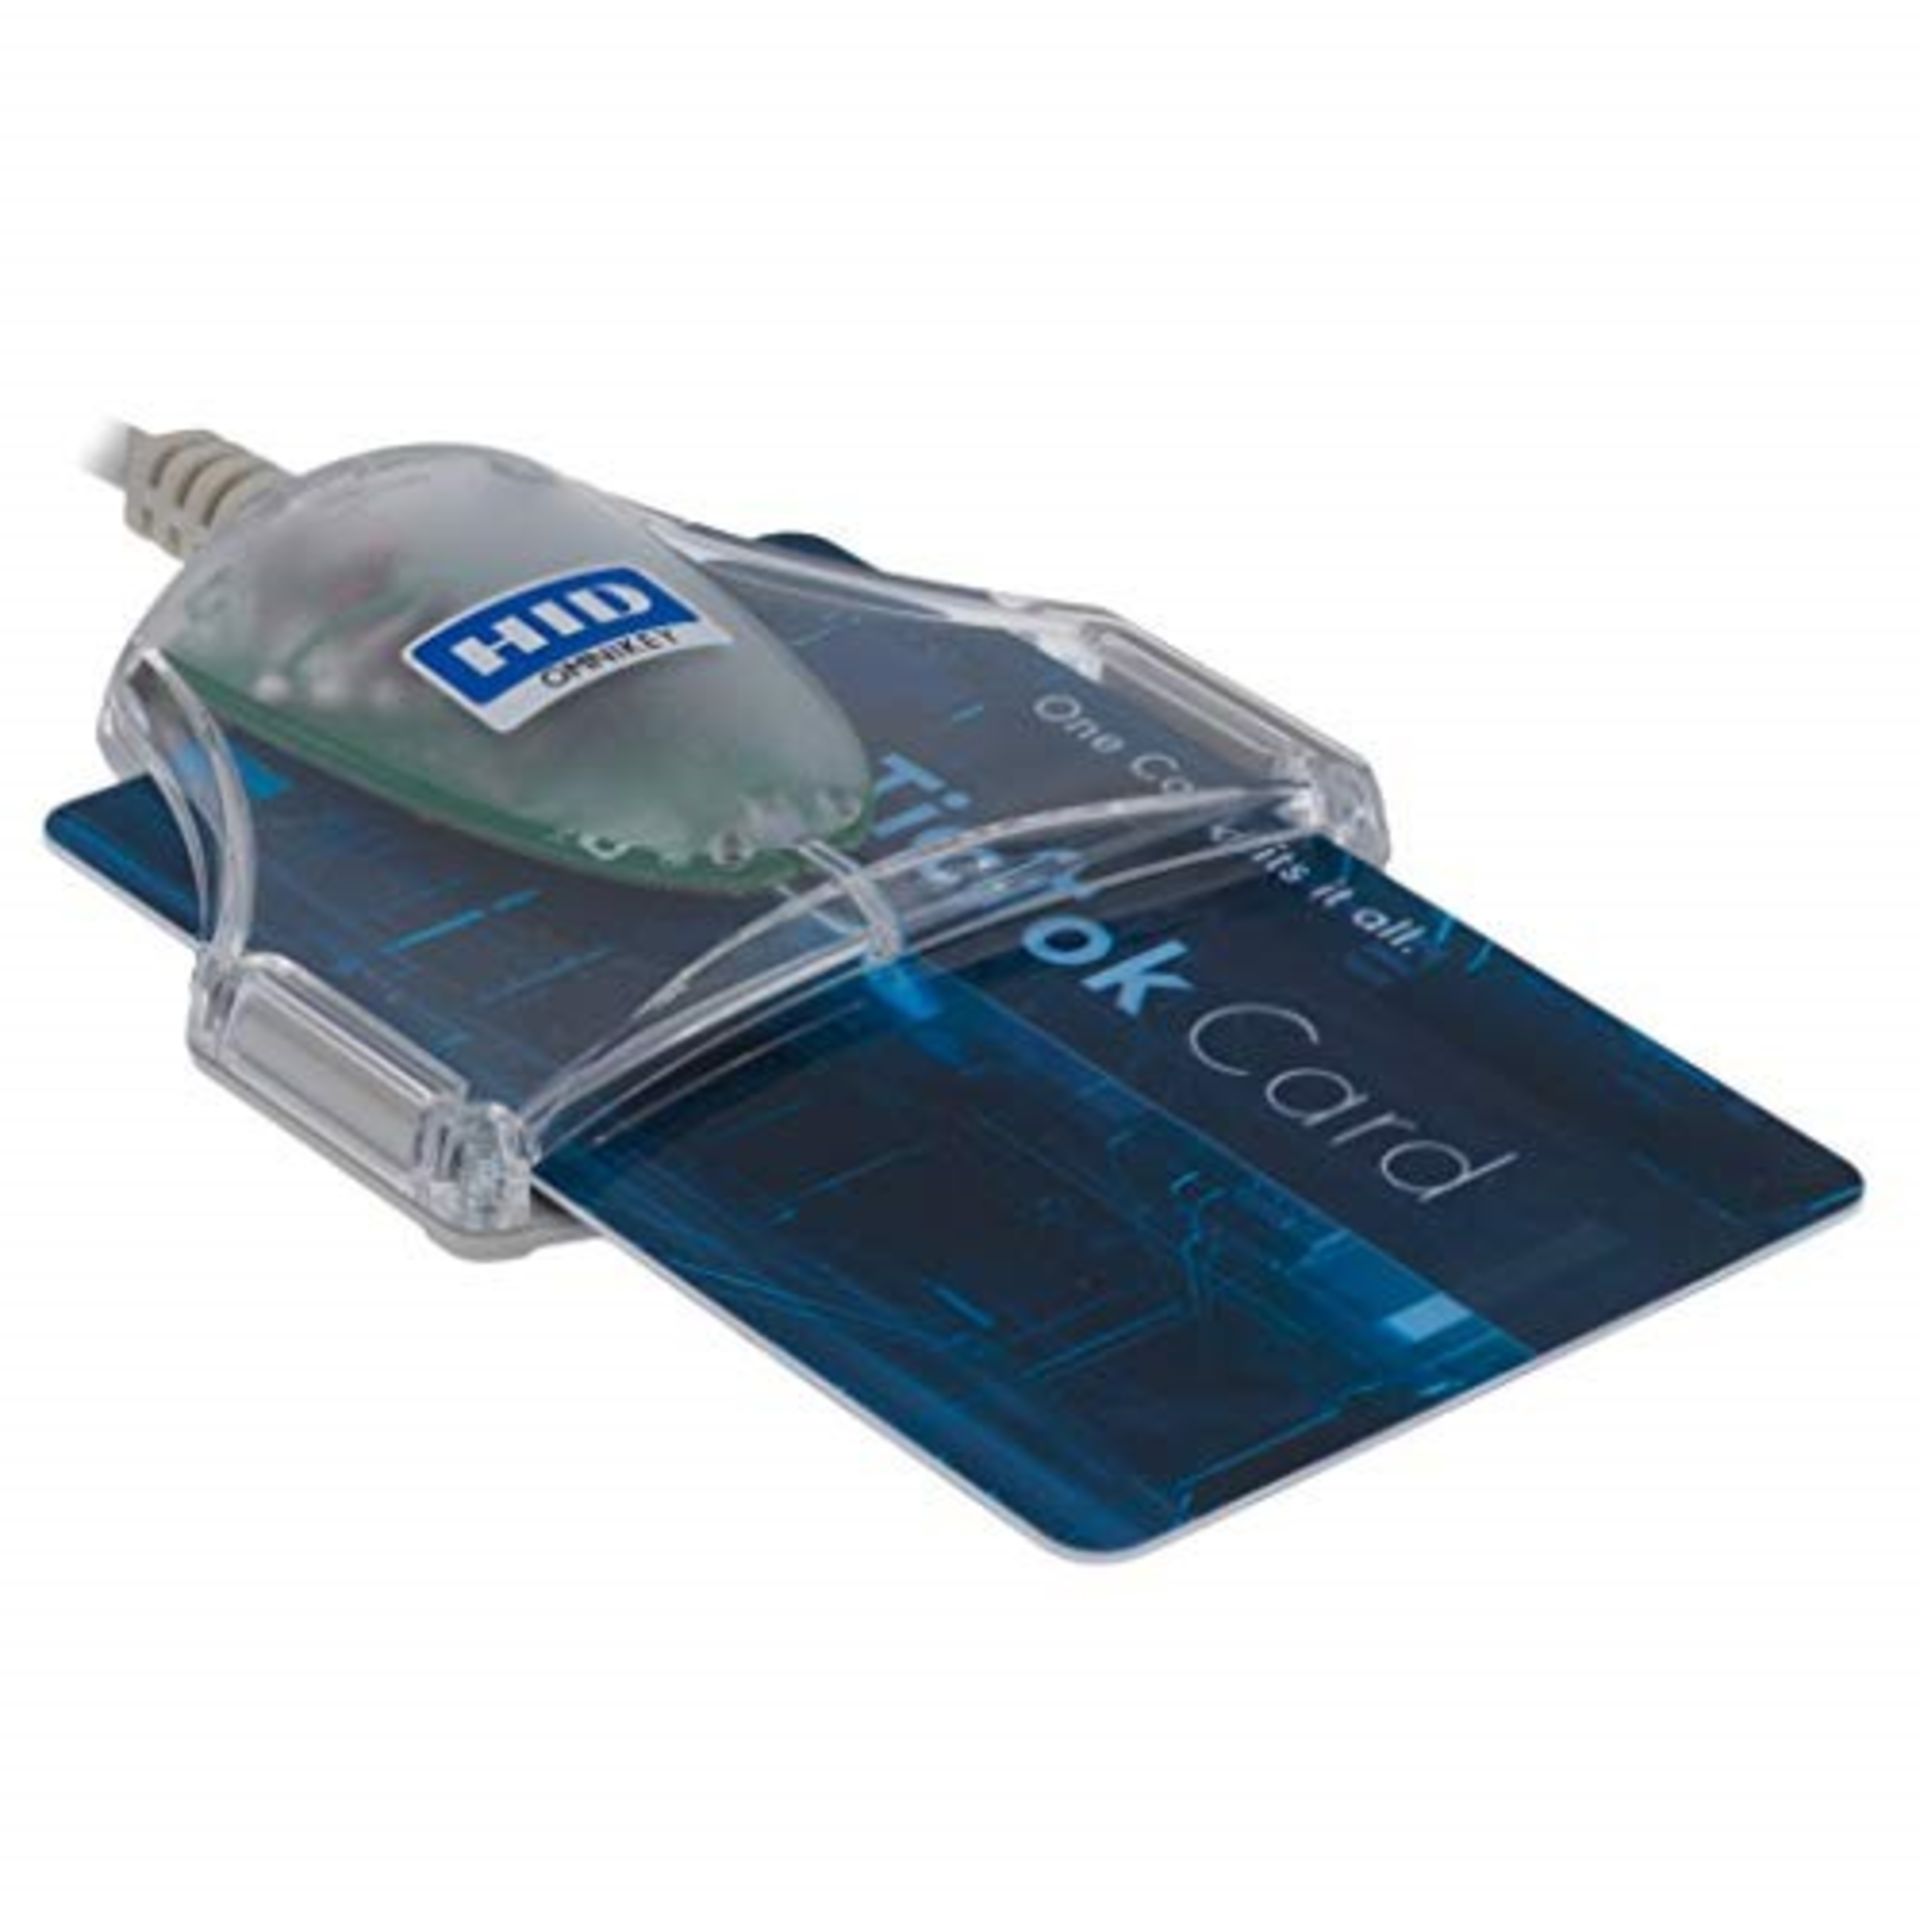 Omnikey 3021 USB Smart Card Reader - Image 3 of 4